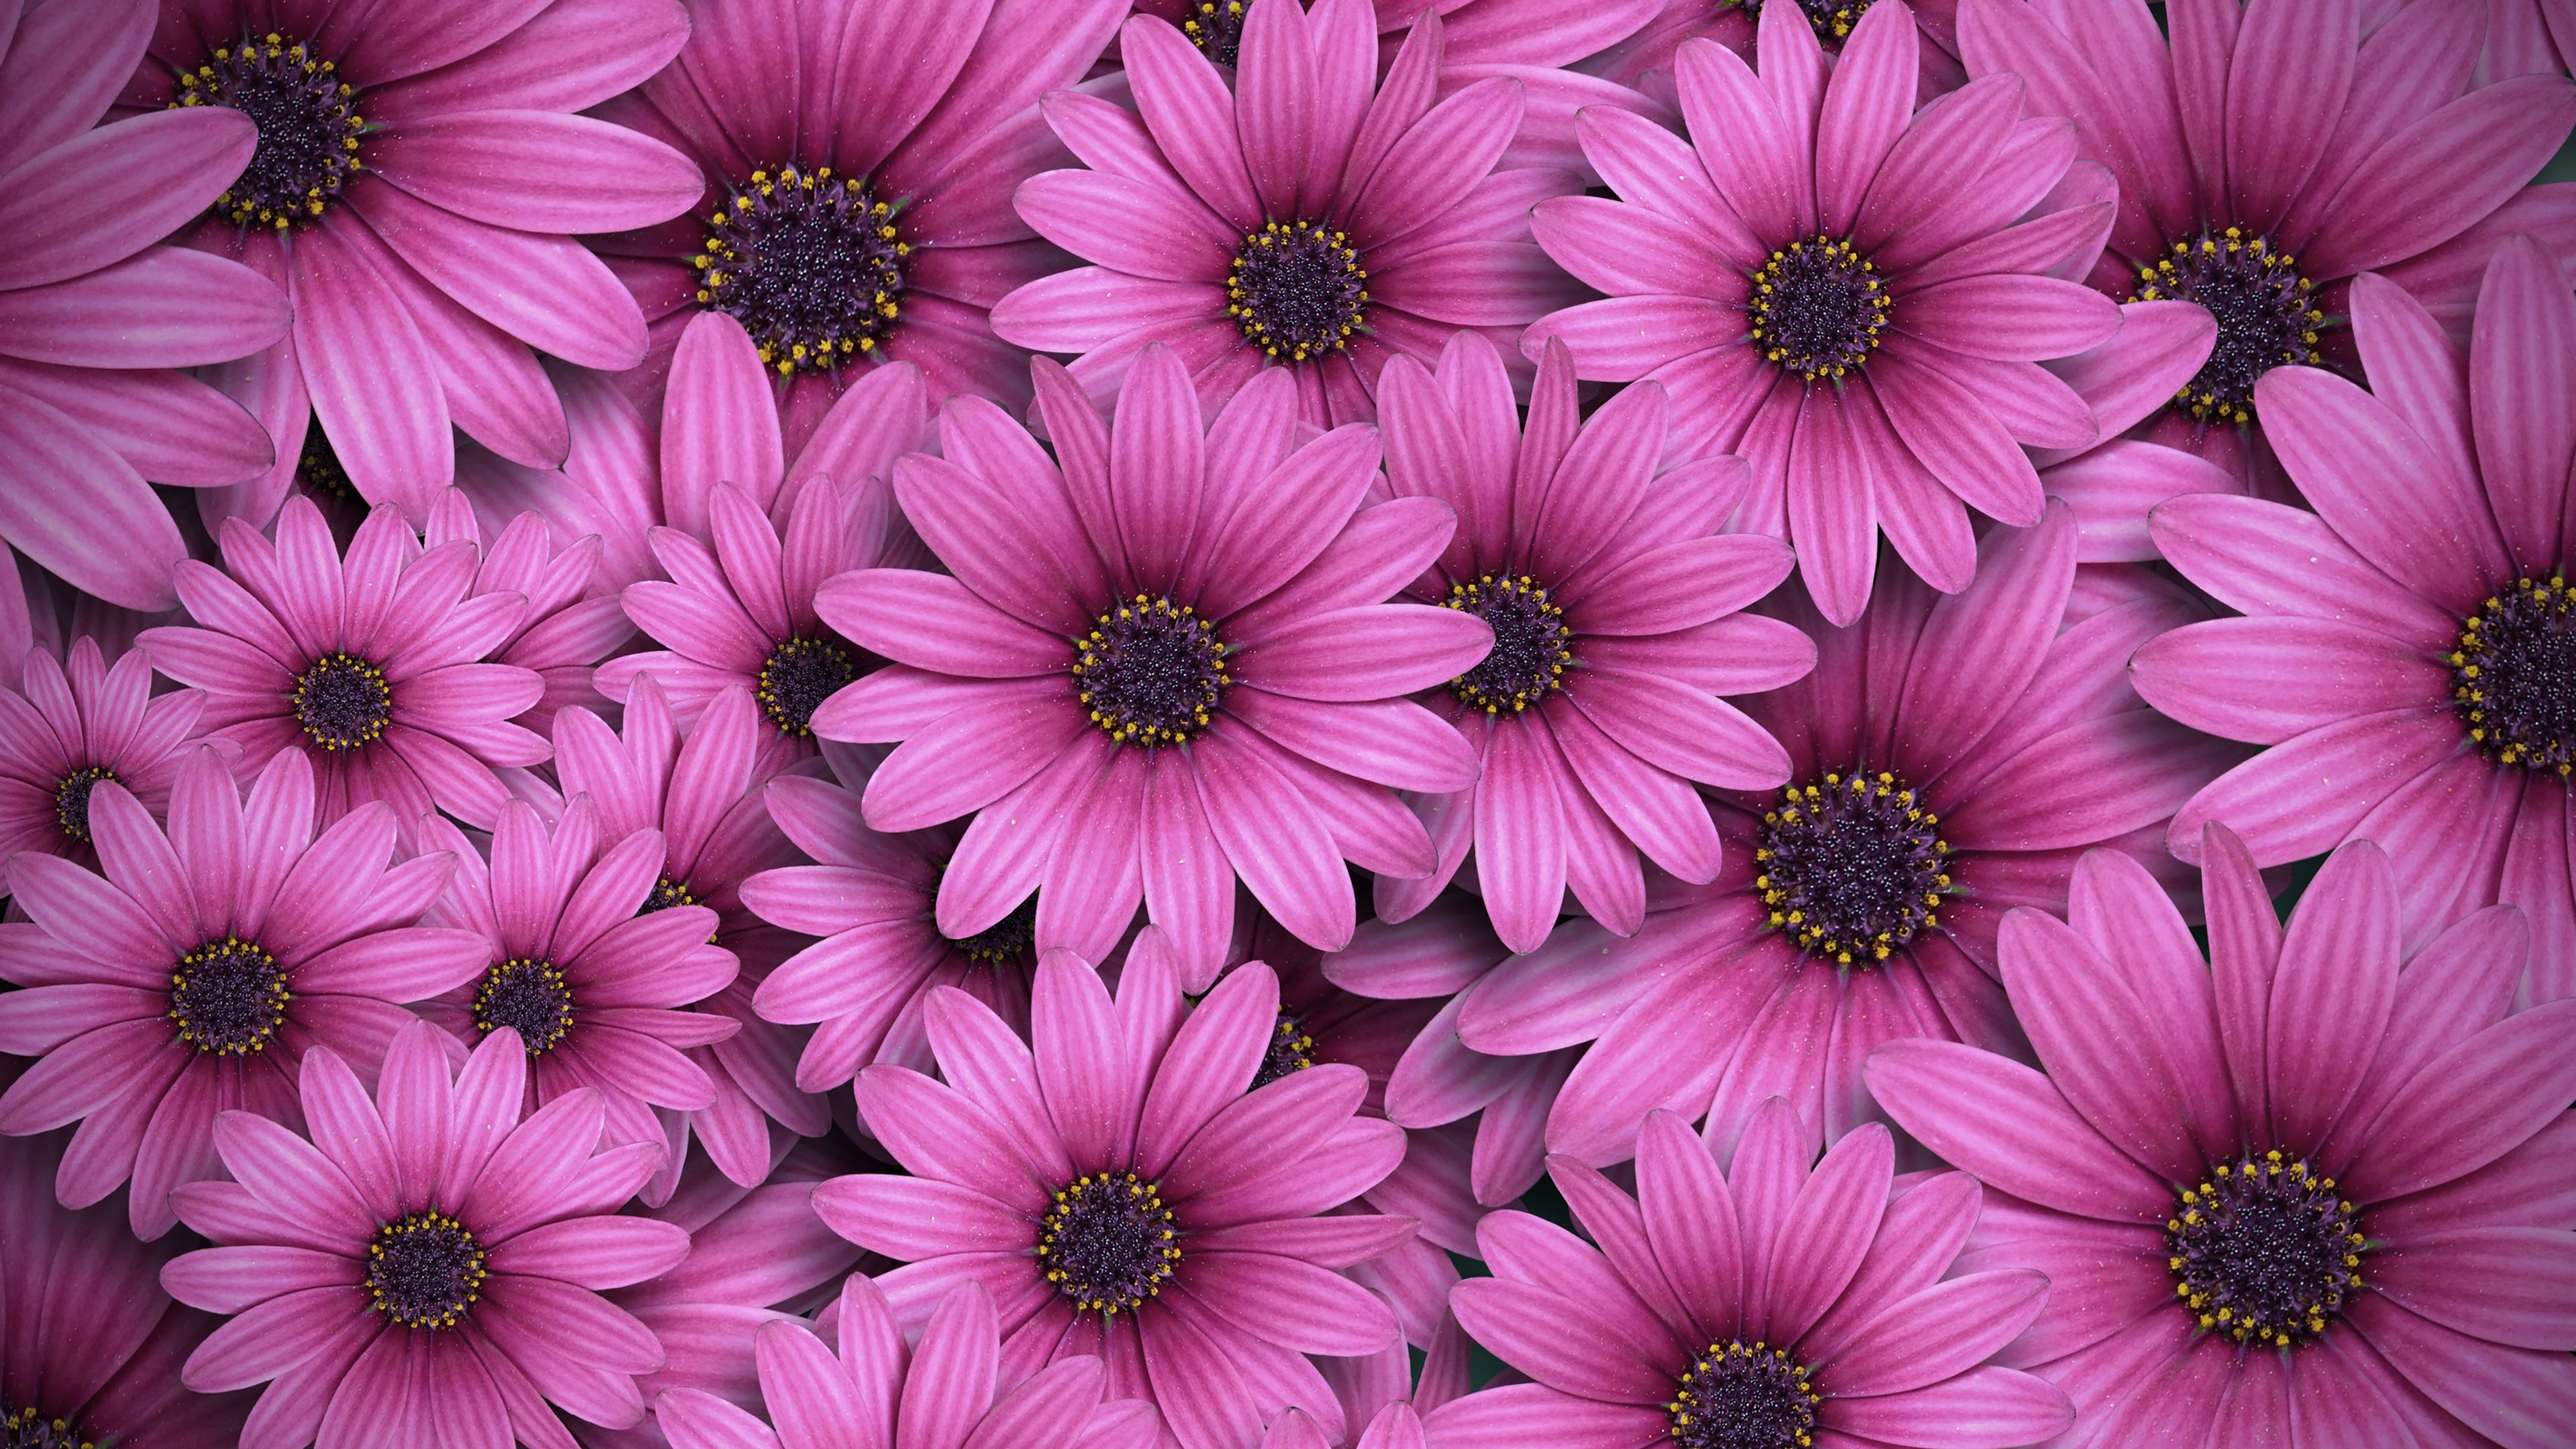 Gerbera flowers, Daisy flowers, Pink daisies, Aesthetic, Spring, 4k Free deskk wallpaper, Ultra HD